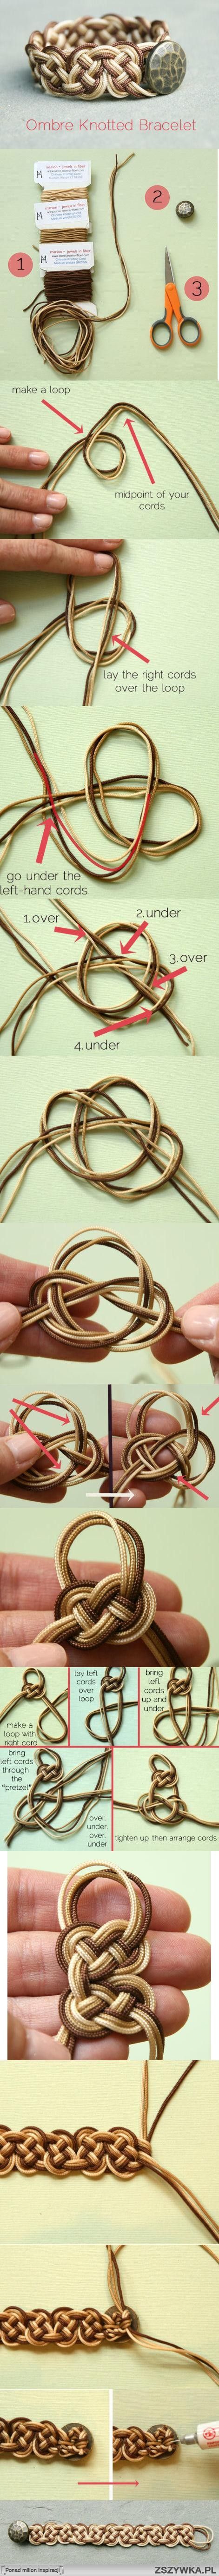 How to DIY Ombre Celtic Knot Bracelet